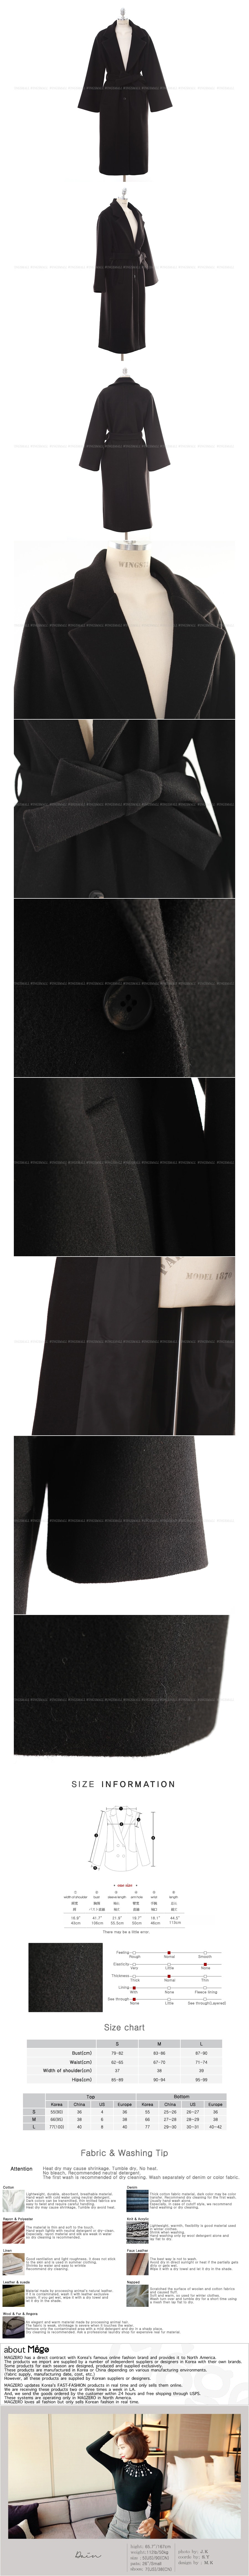 [2017 F/W] Oversized Wide Sleeve Wool Blend Long Coat with Belt Black One Size(Free)